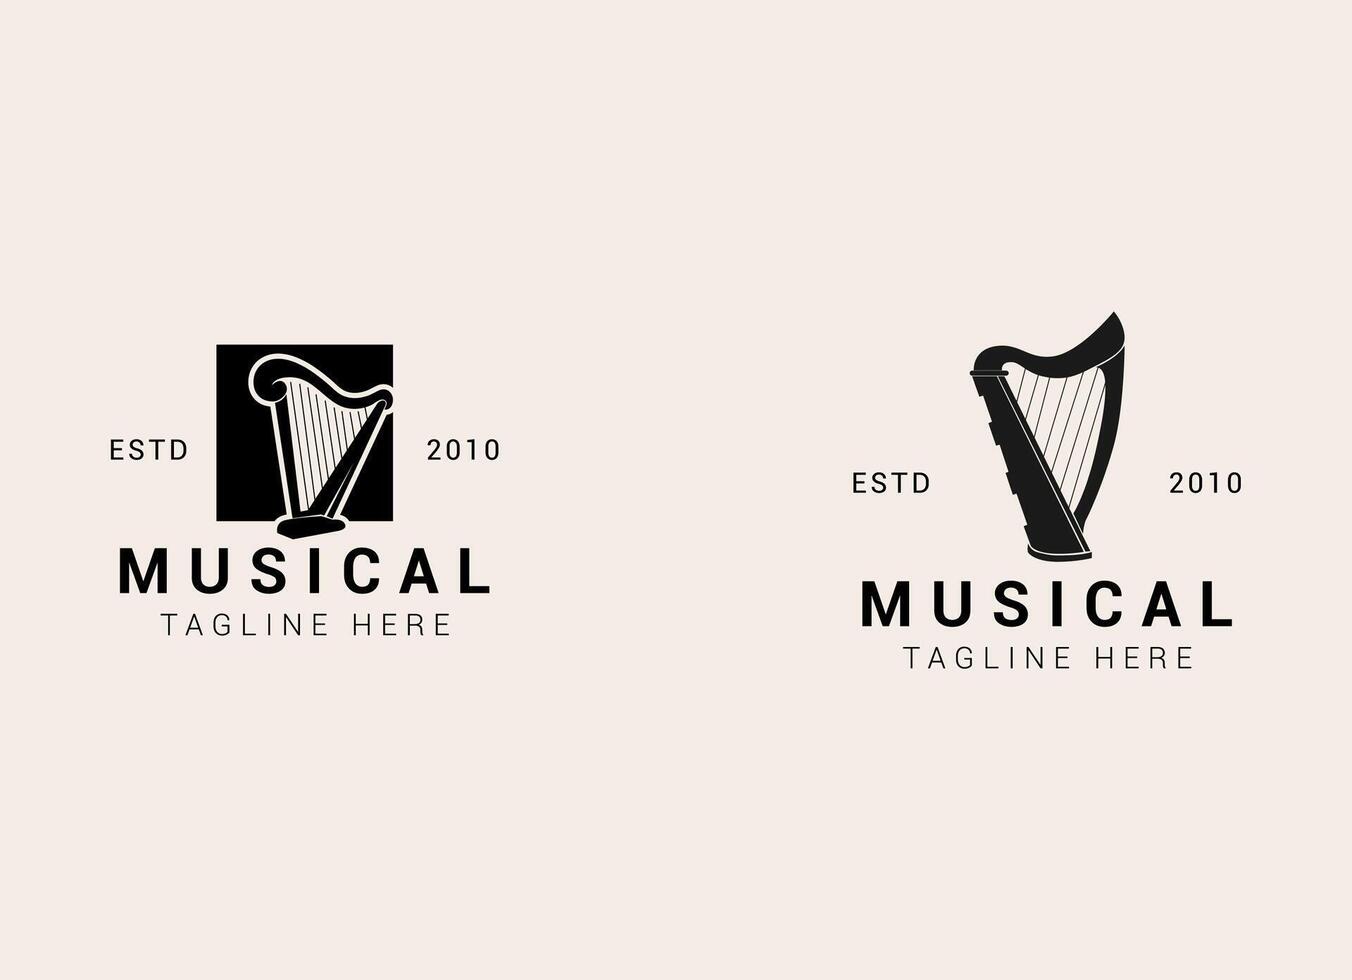 Creative and simple musical instrument logo. Harp logo design vector illustration